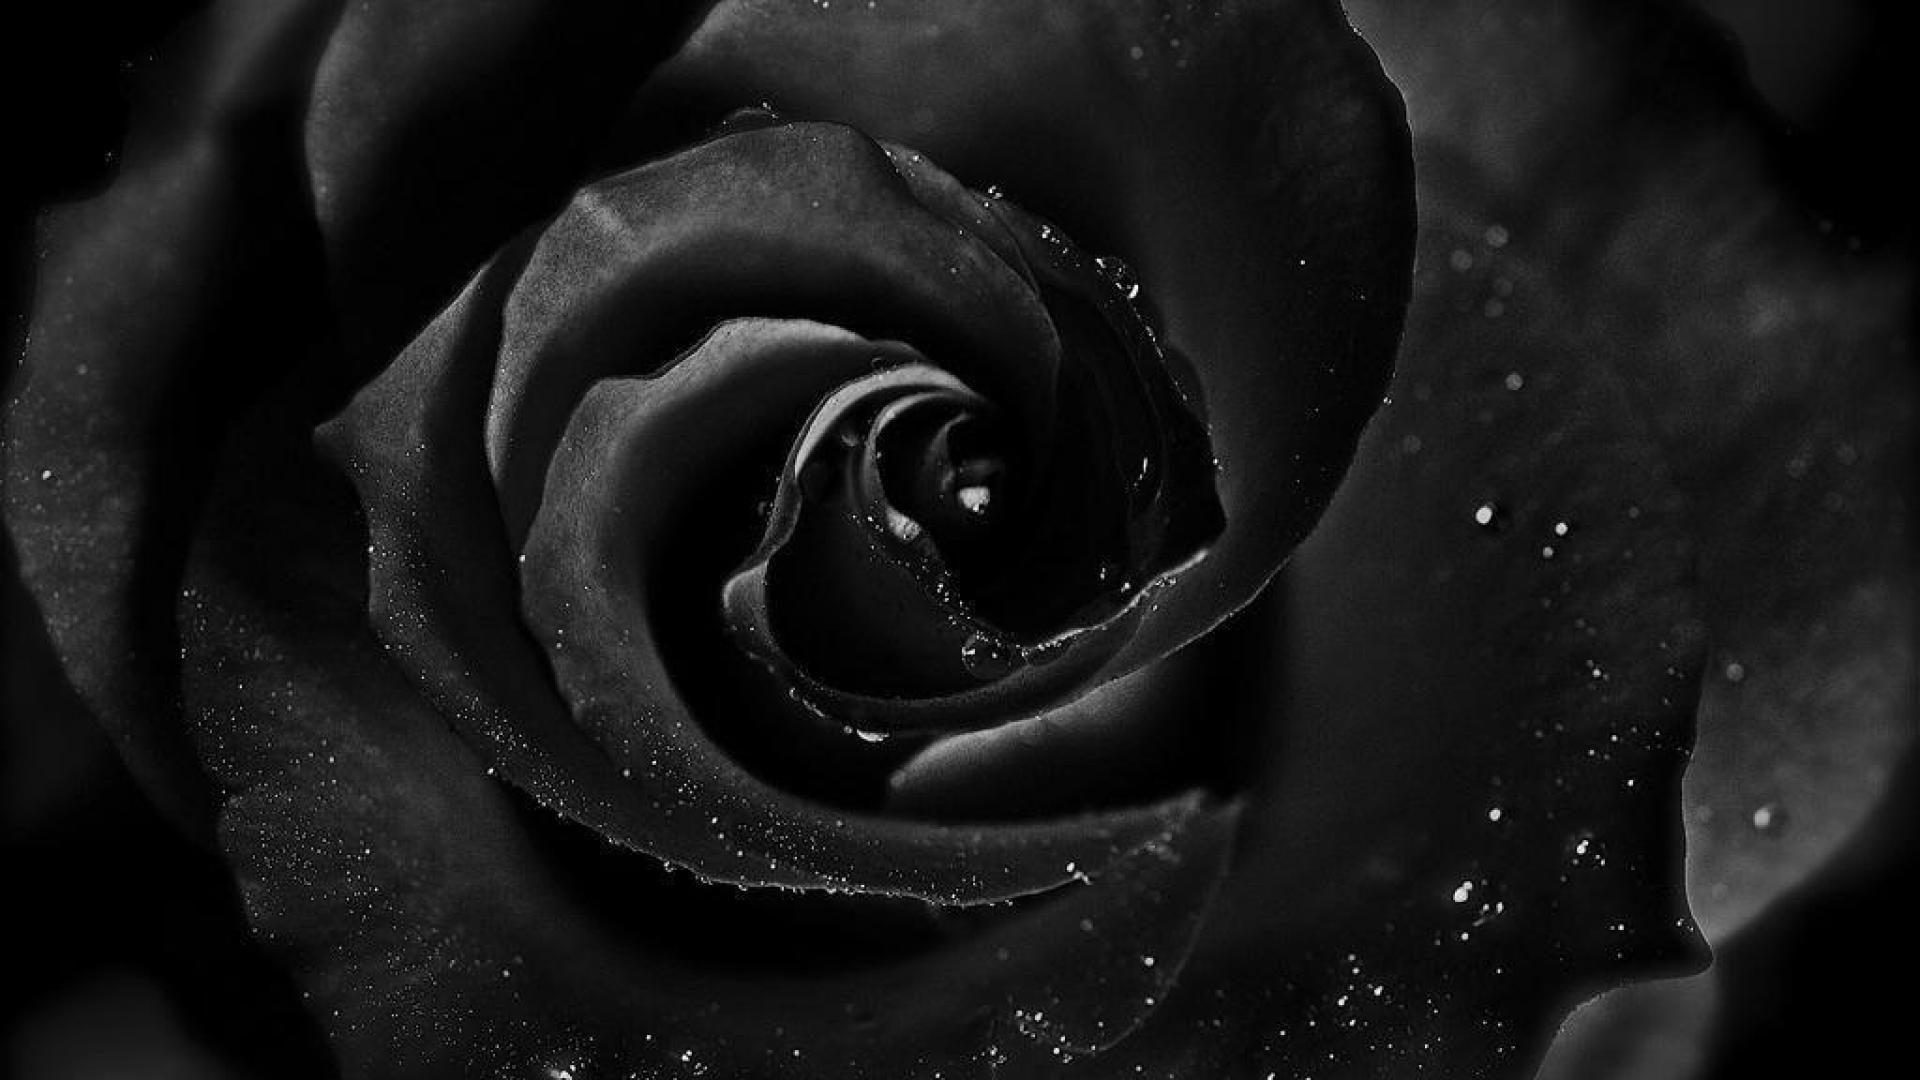  Black  Rose  Wallpapers  Top Free Black  Rose  Backgrounds 